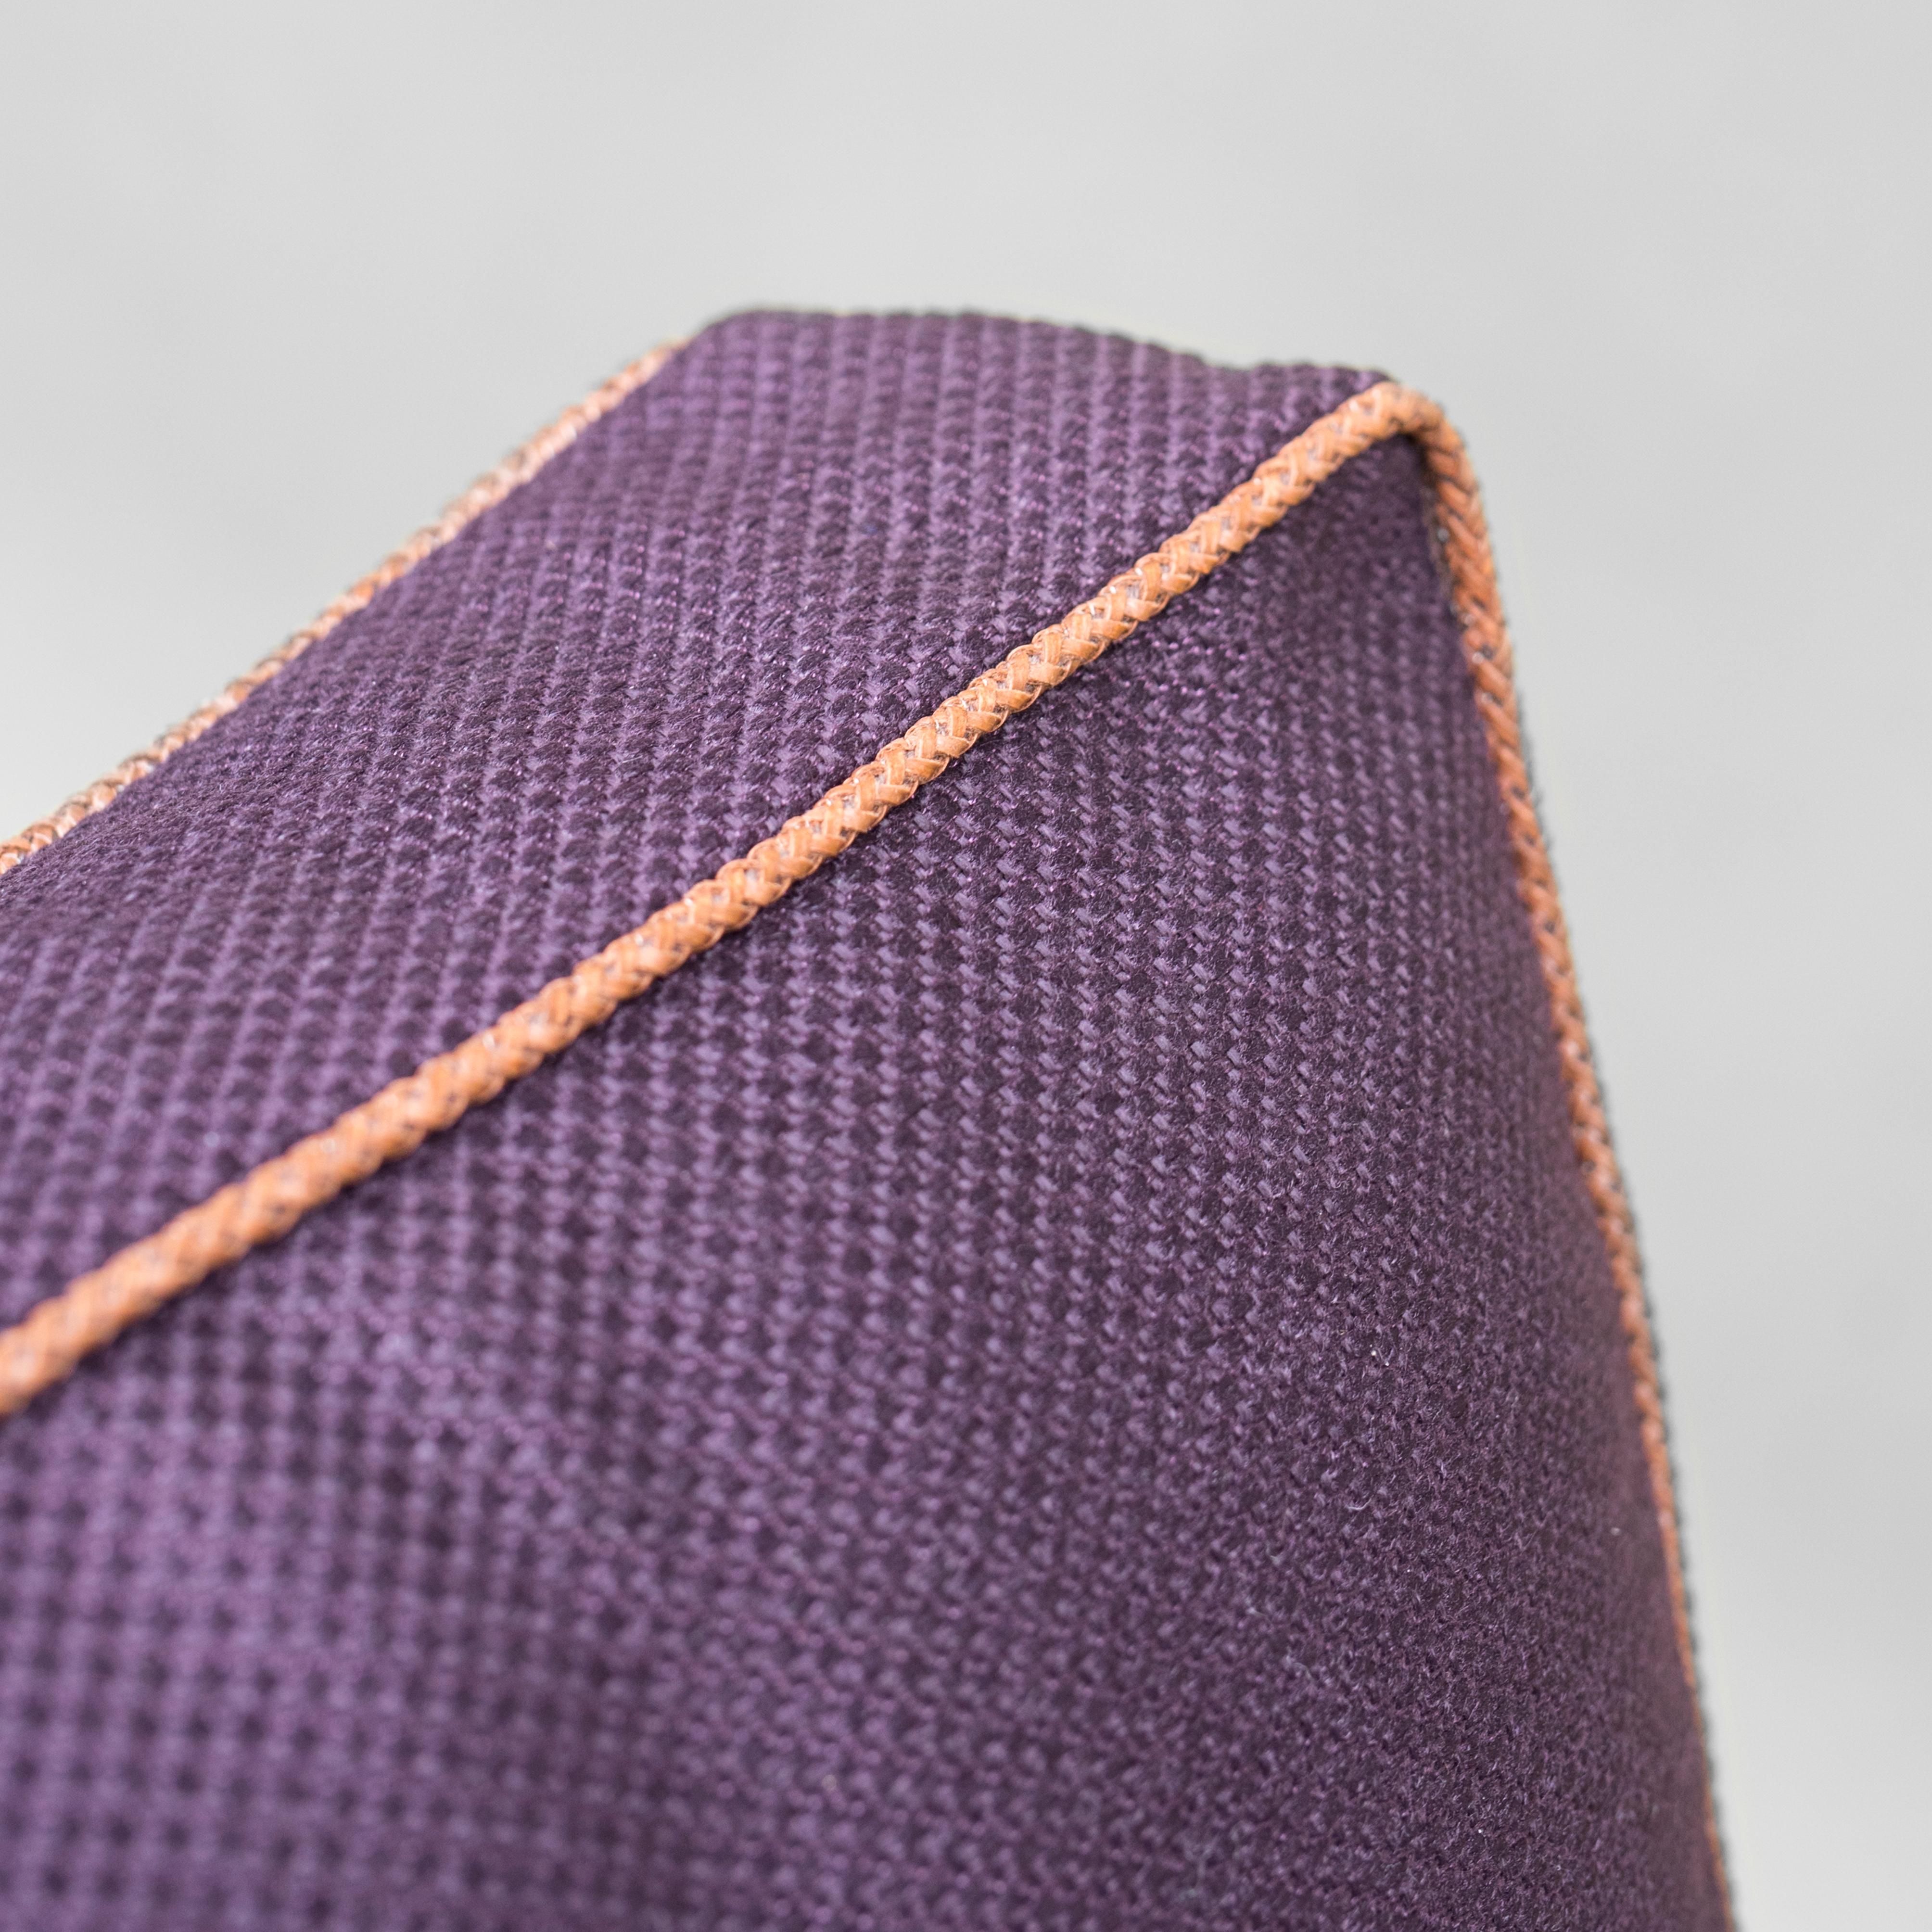 Peter Ghyczy Armchair Urban Brad 'GP01' Ristretto or Purple Fabric 1